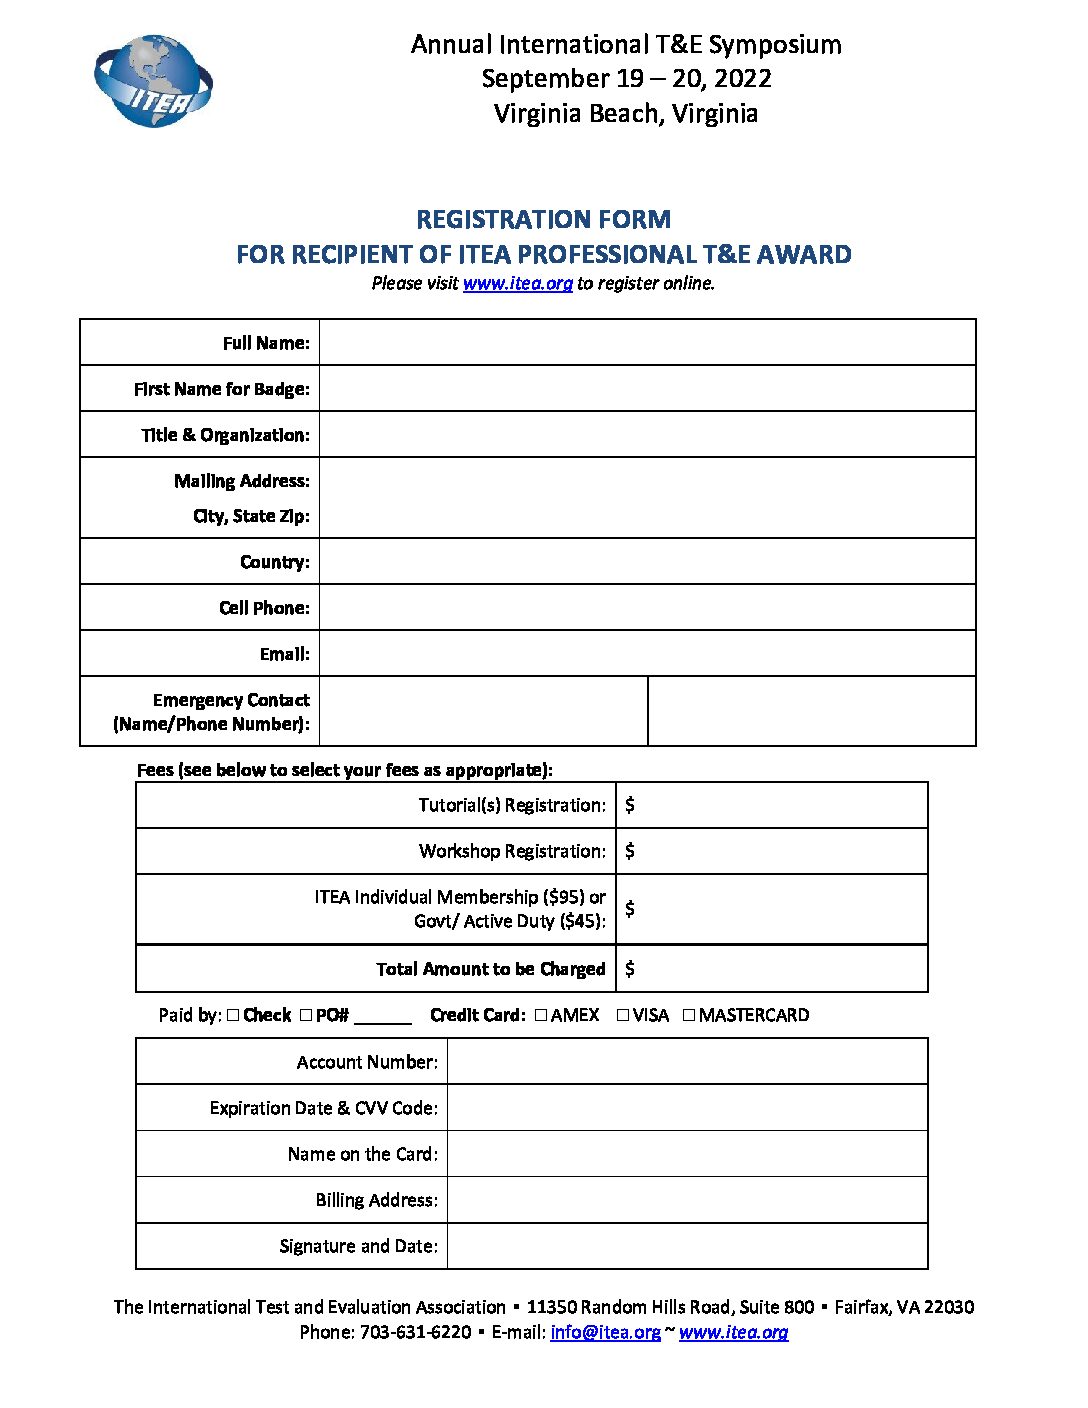 Manual Registration Form Symposium Award Winners